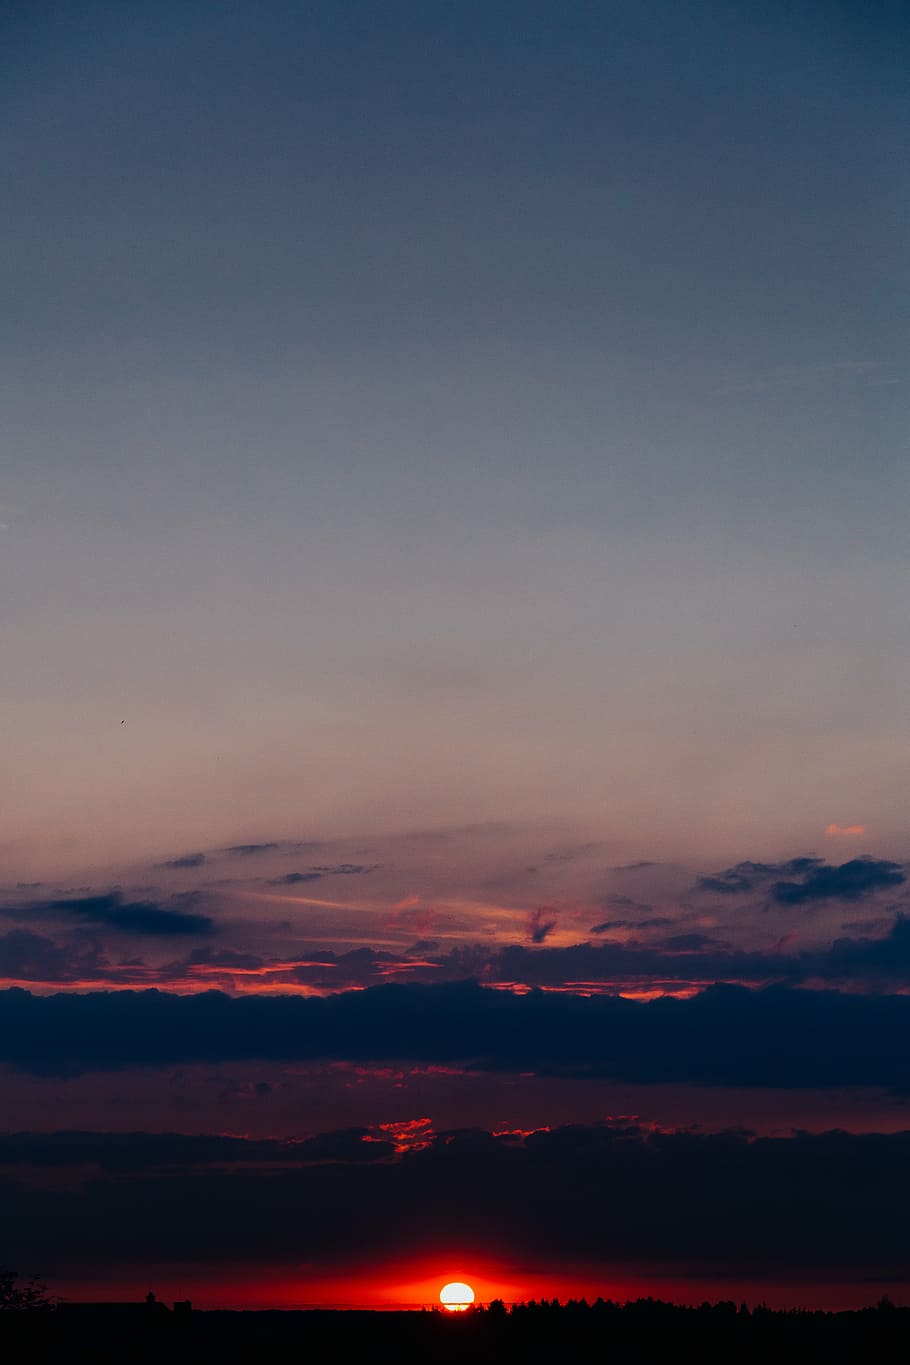 Night Sky Clouds Sunset Scenery 4K Wallpaper iPhone HD Phone #7700i